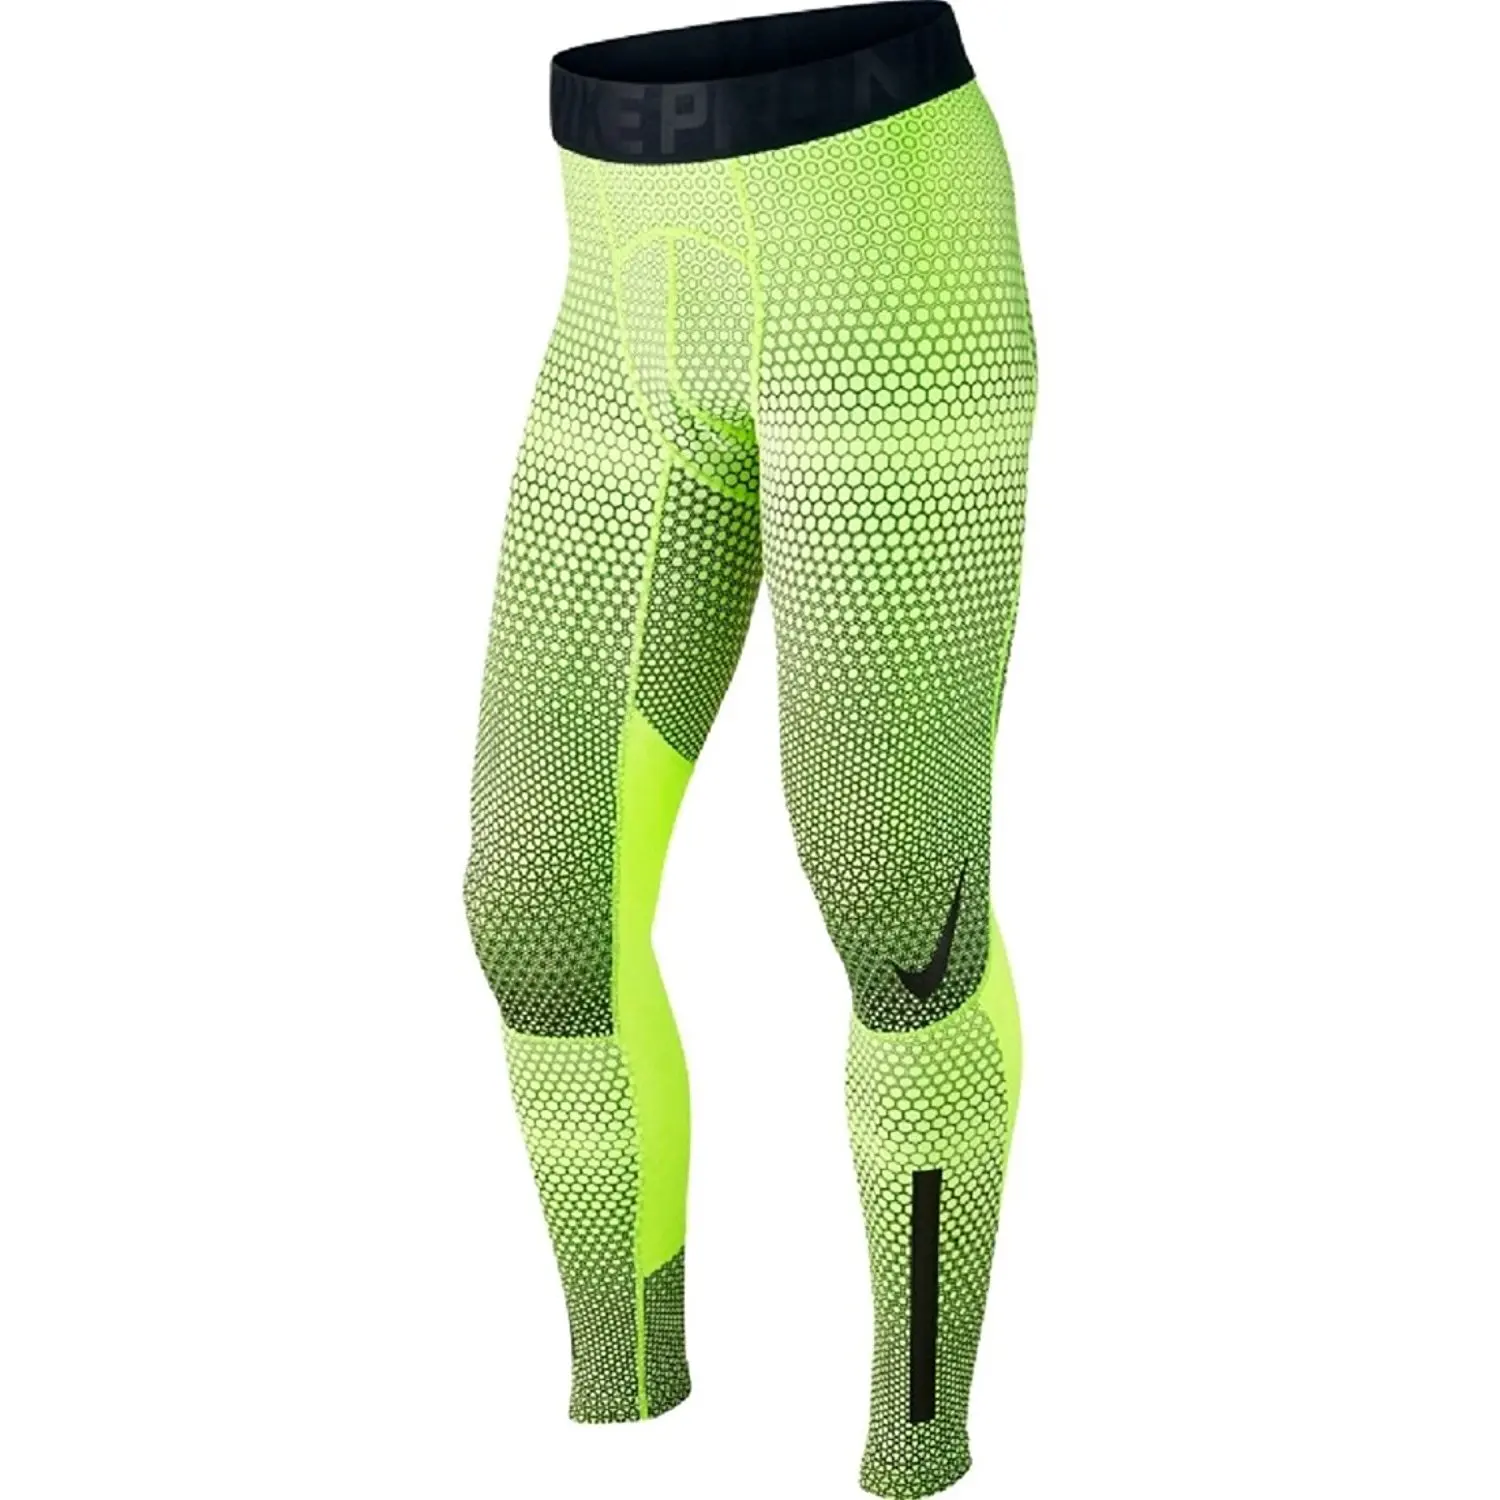 neon green nike compression pants \u003e Up 